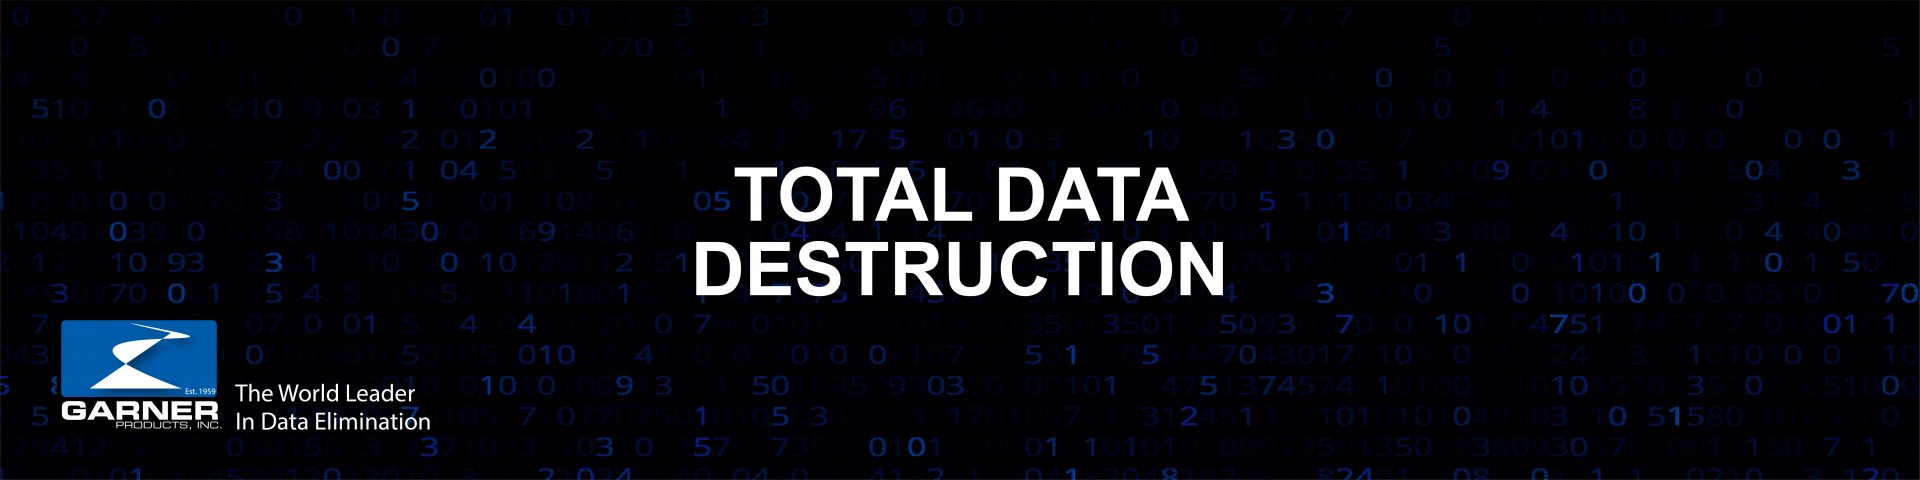 garner-total-data-destruction-1920x480